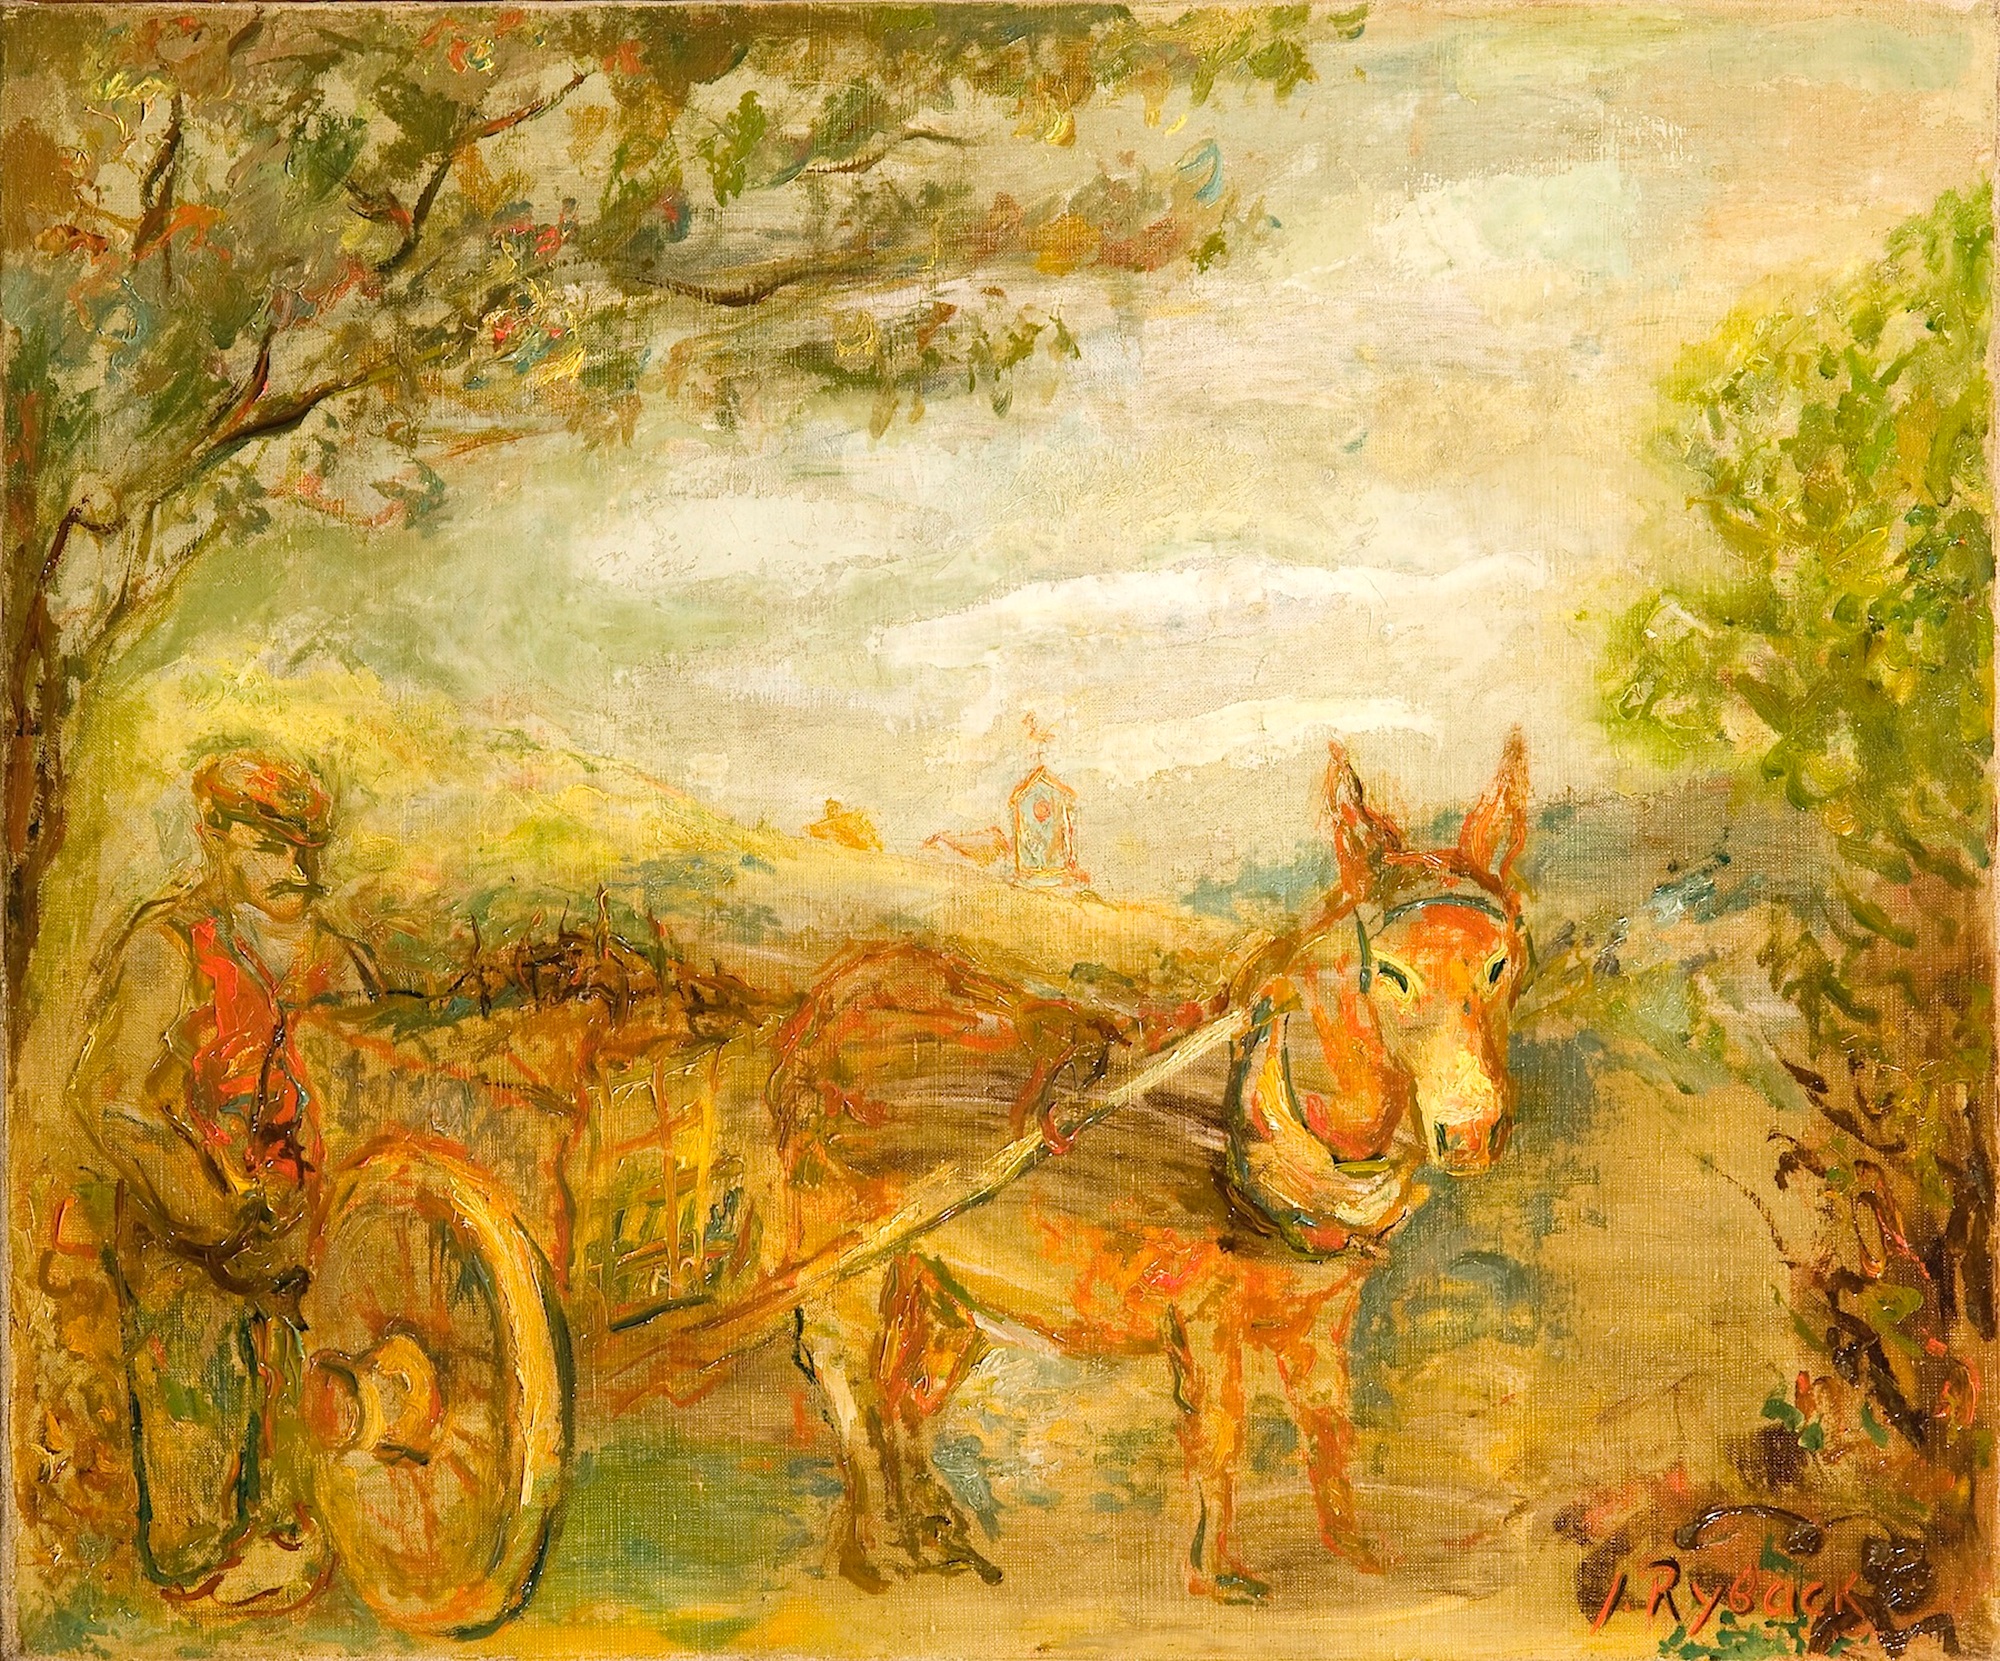 Landscape with a Cart